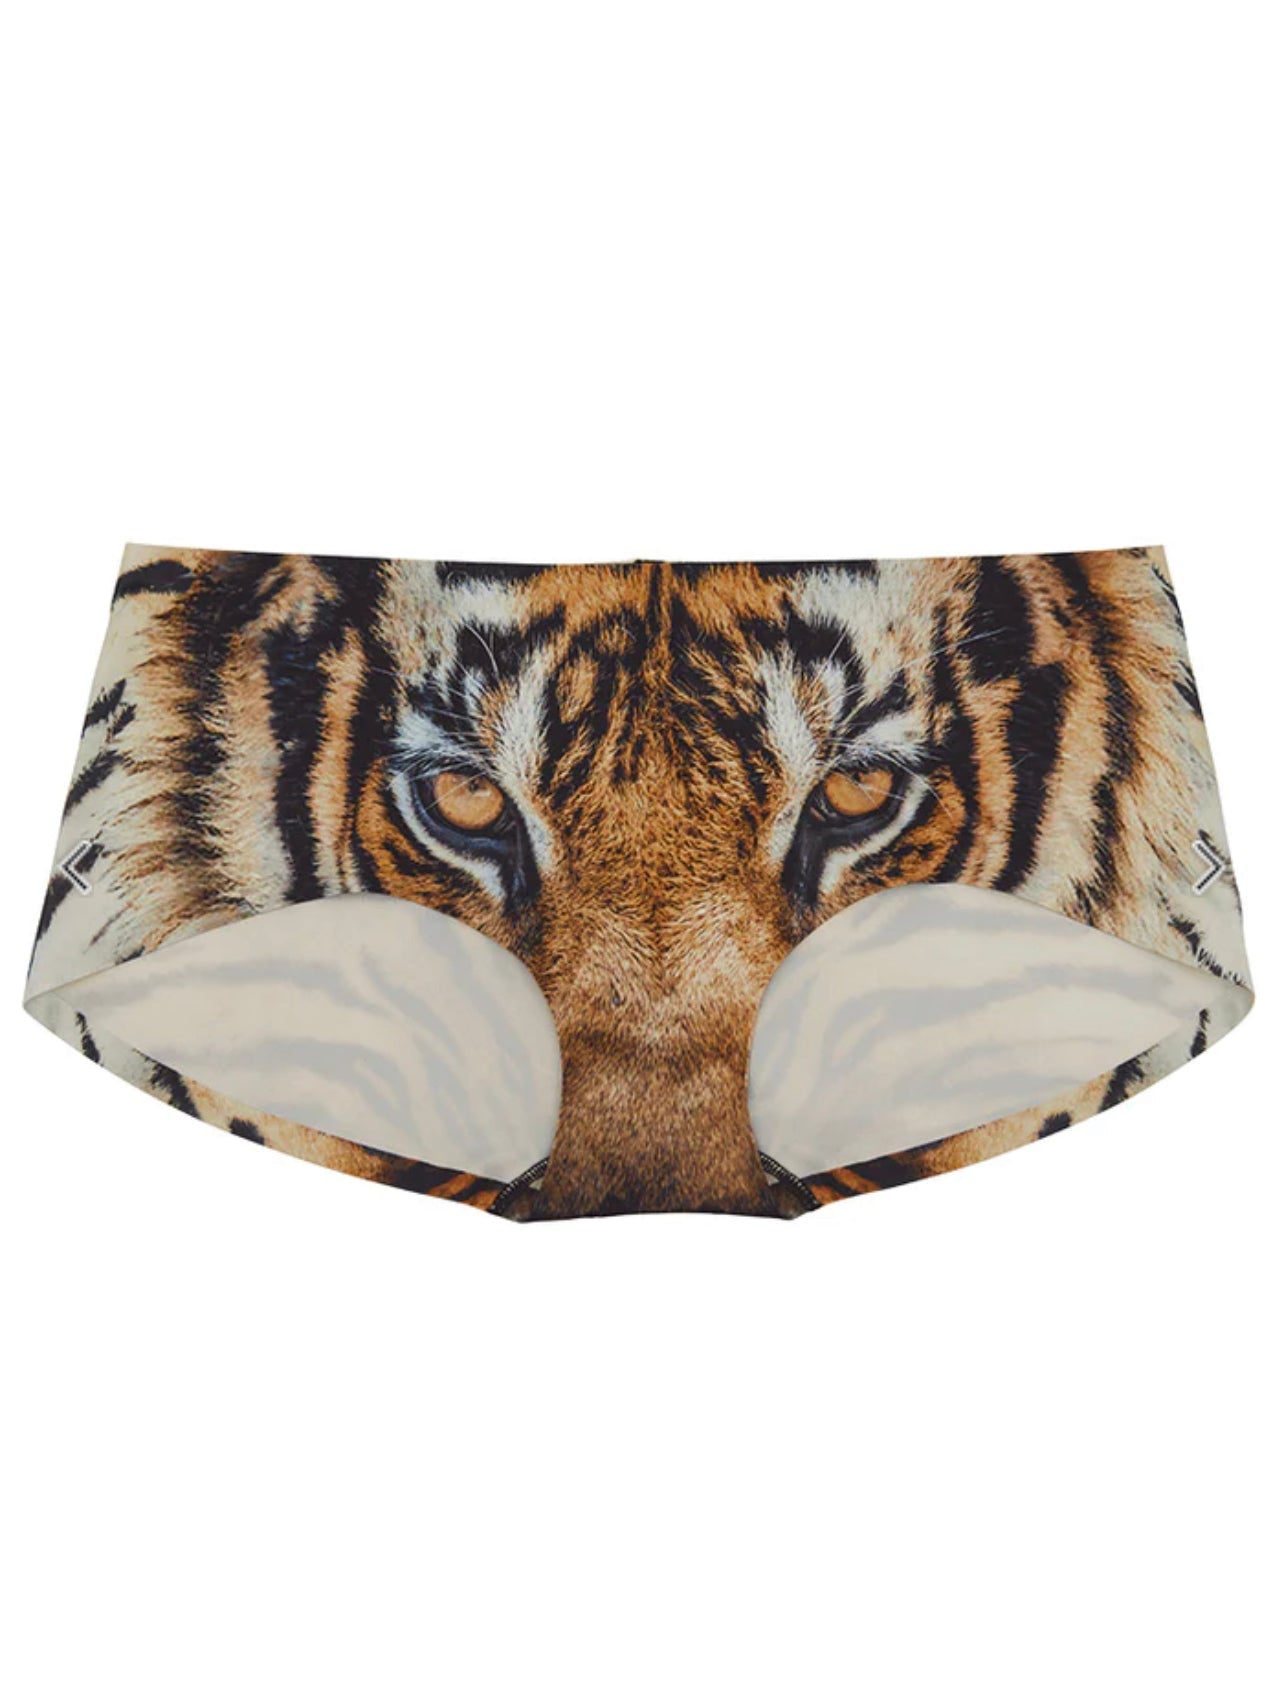 Tempting Tiger Surf Shorts